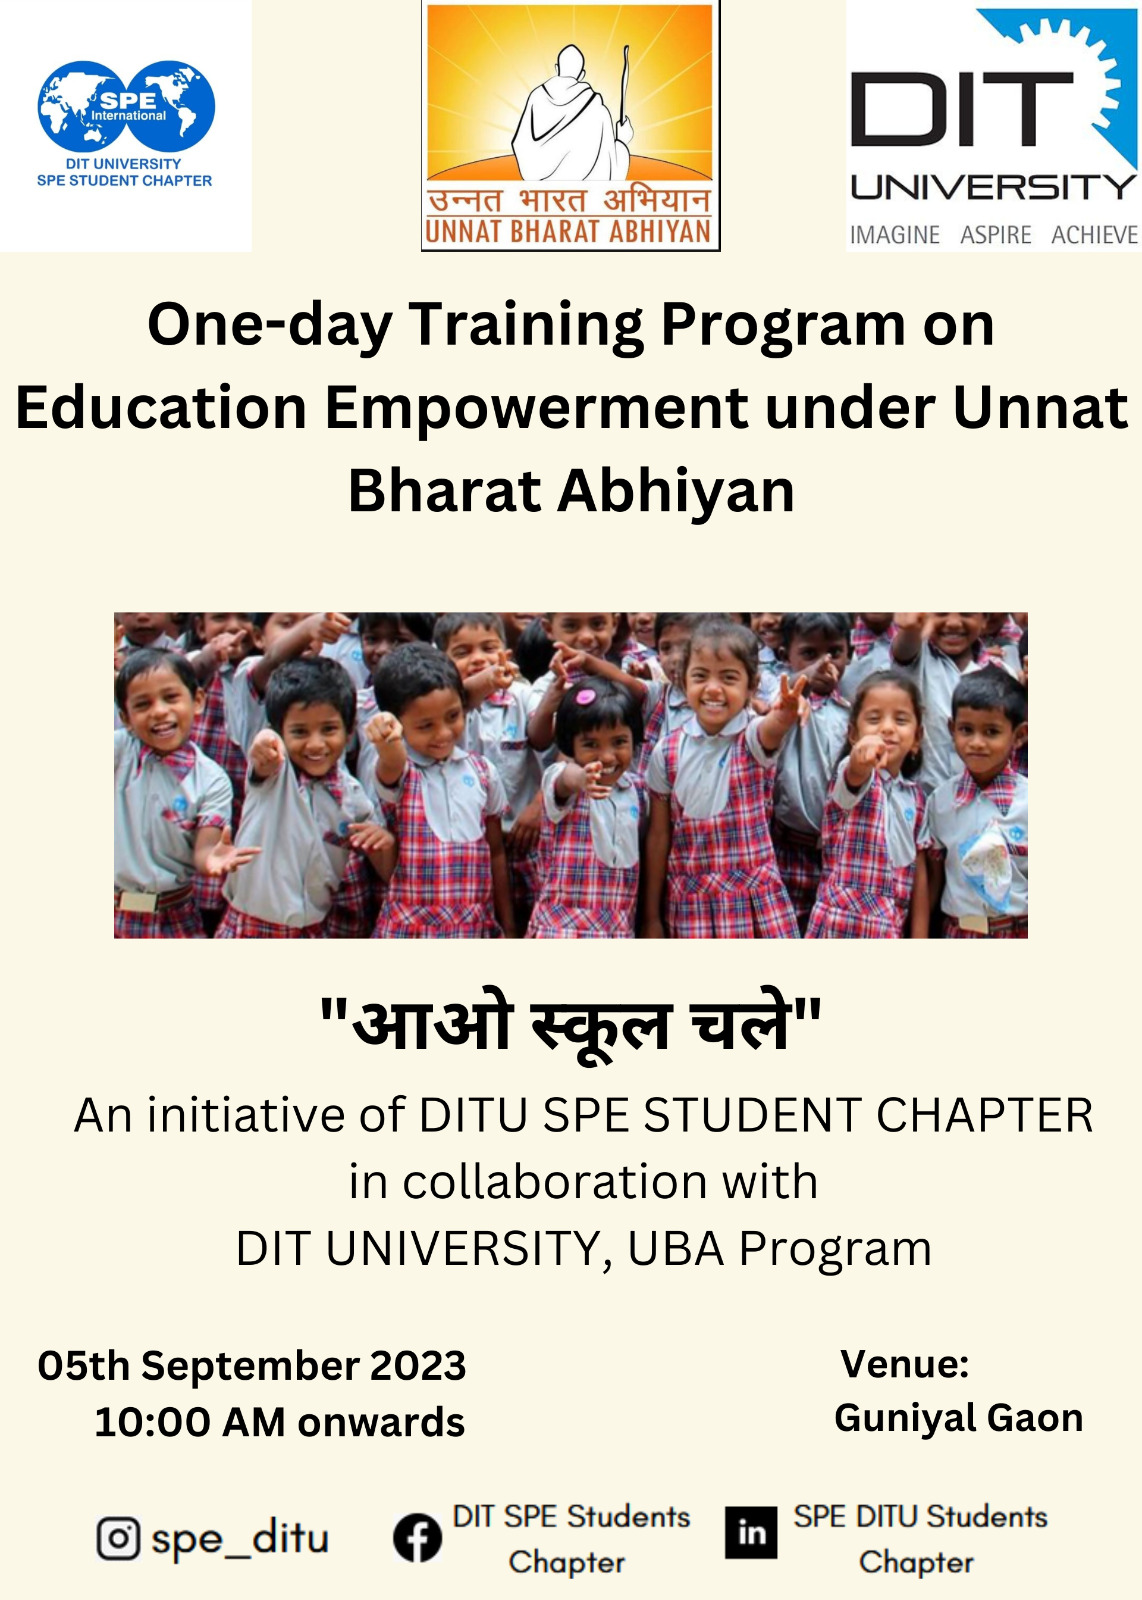 One-day training Program on Education Empowerment Under Unnar Bharat Abhiyan - On 5th Sep 2023